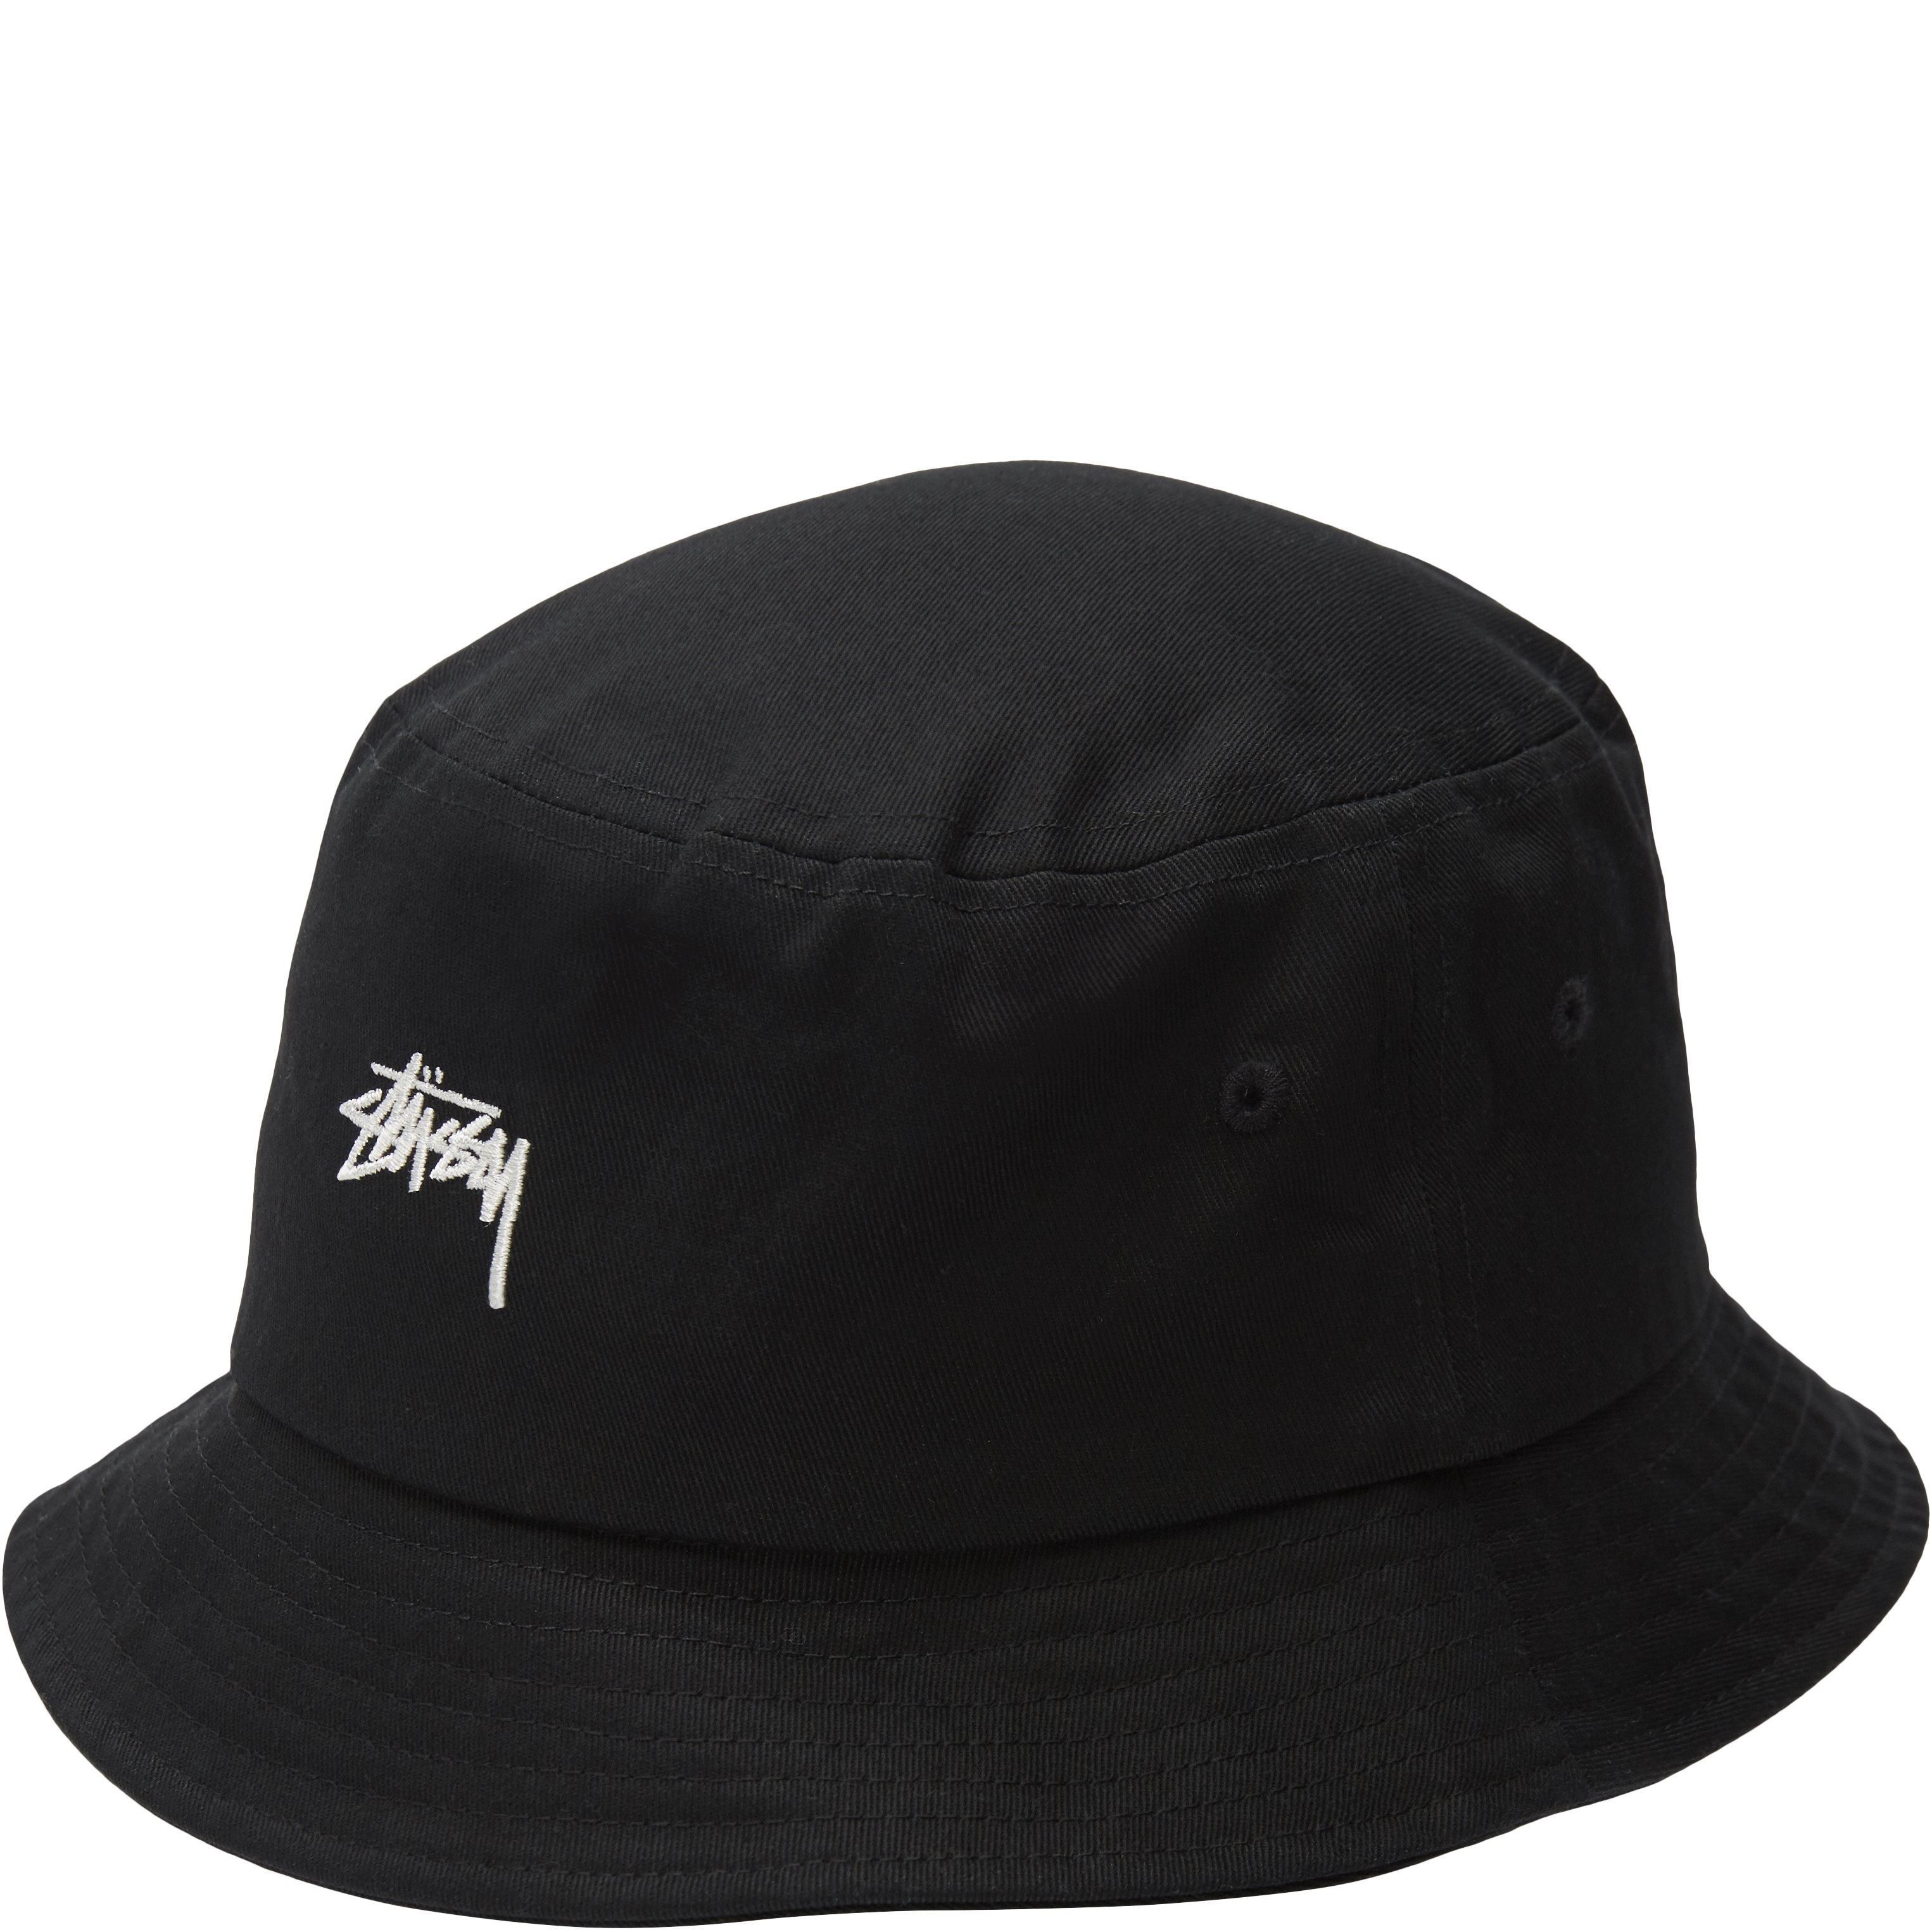 Stock Bucket Hat - Caps - Black